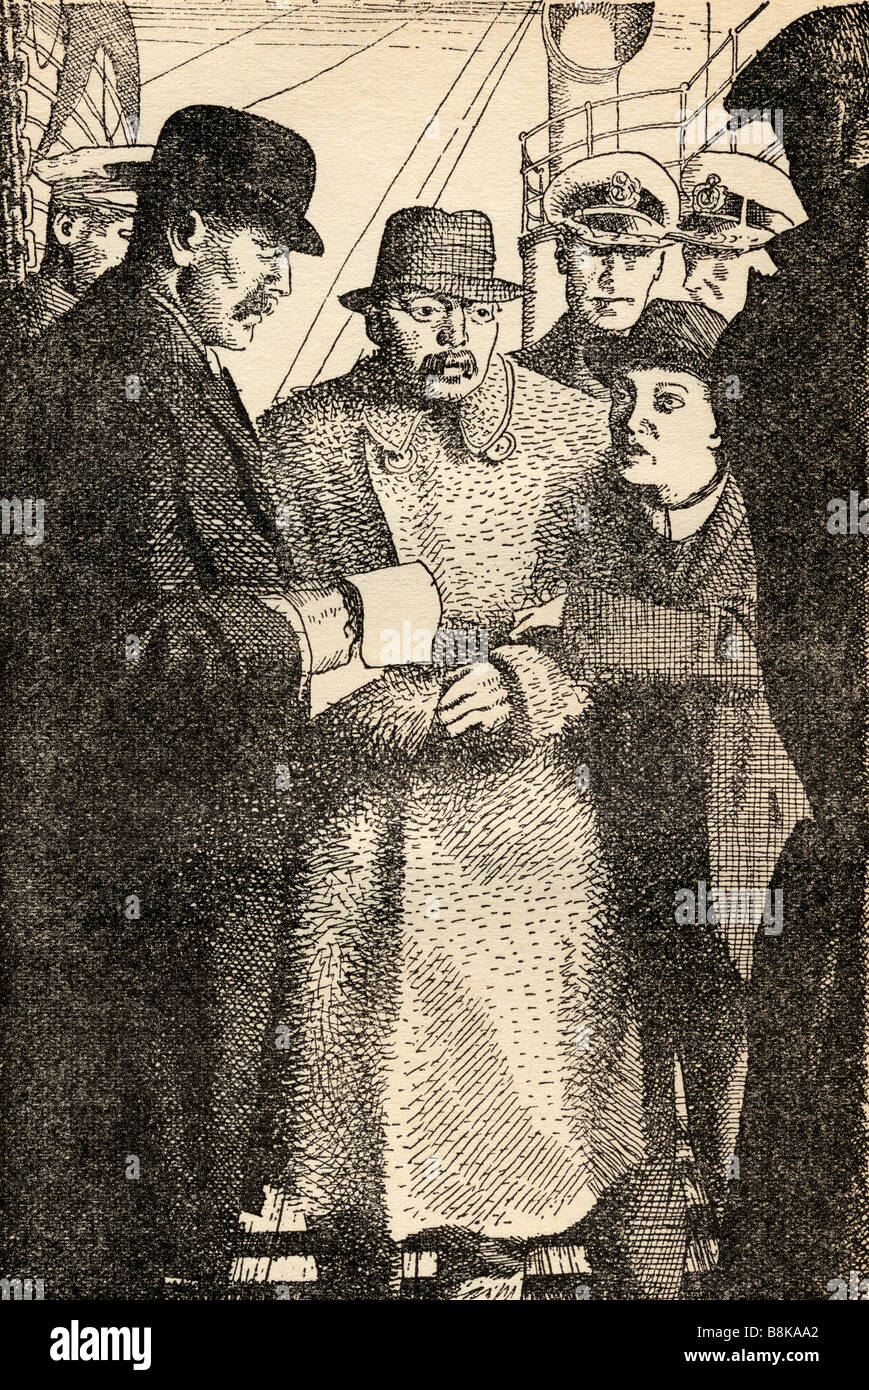 The Arrest of Crippen. John Pimlott Hawley Harvey Crippen, 1862 - 1910. Stock Photo